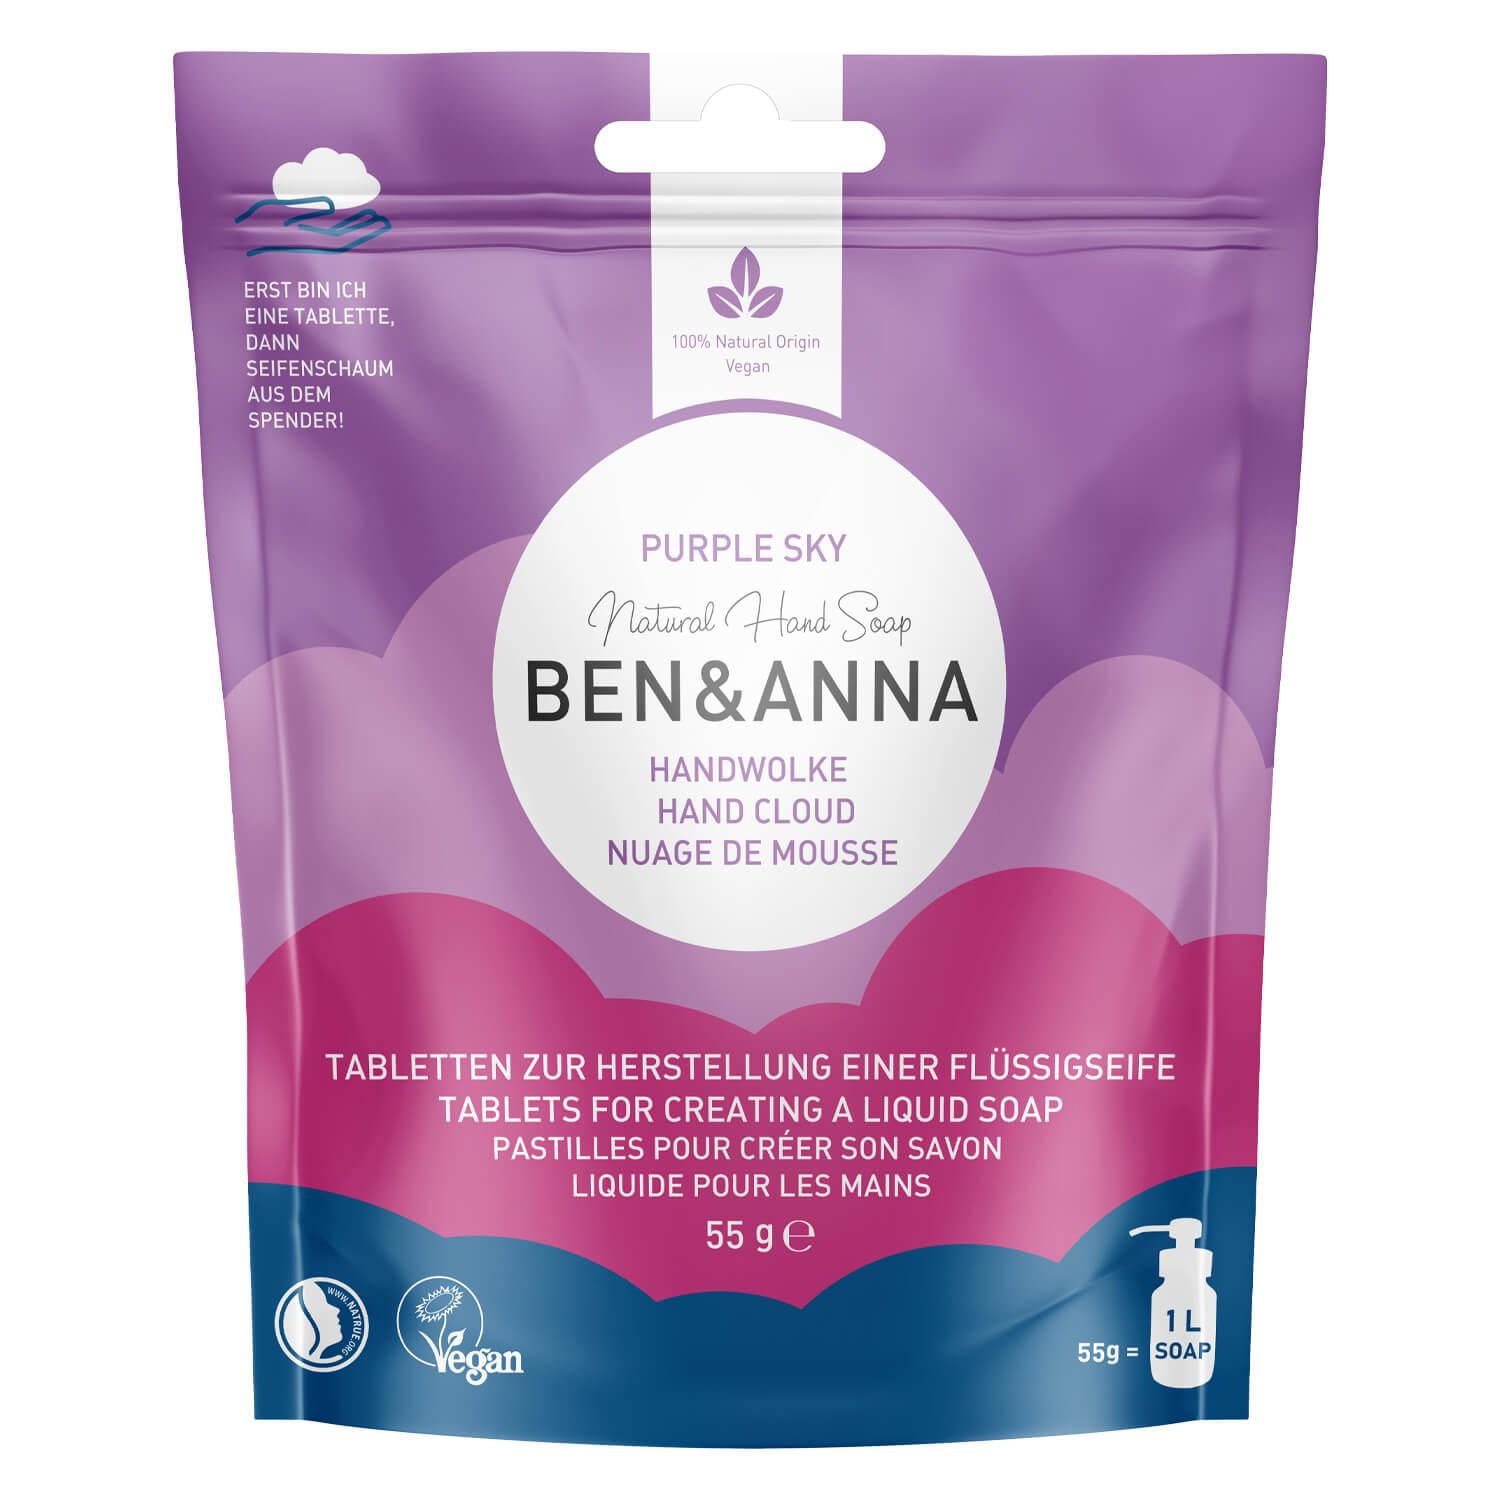 BEN&ANNA - Handwolke Purple Sky